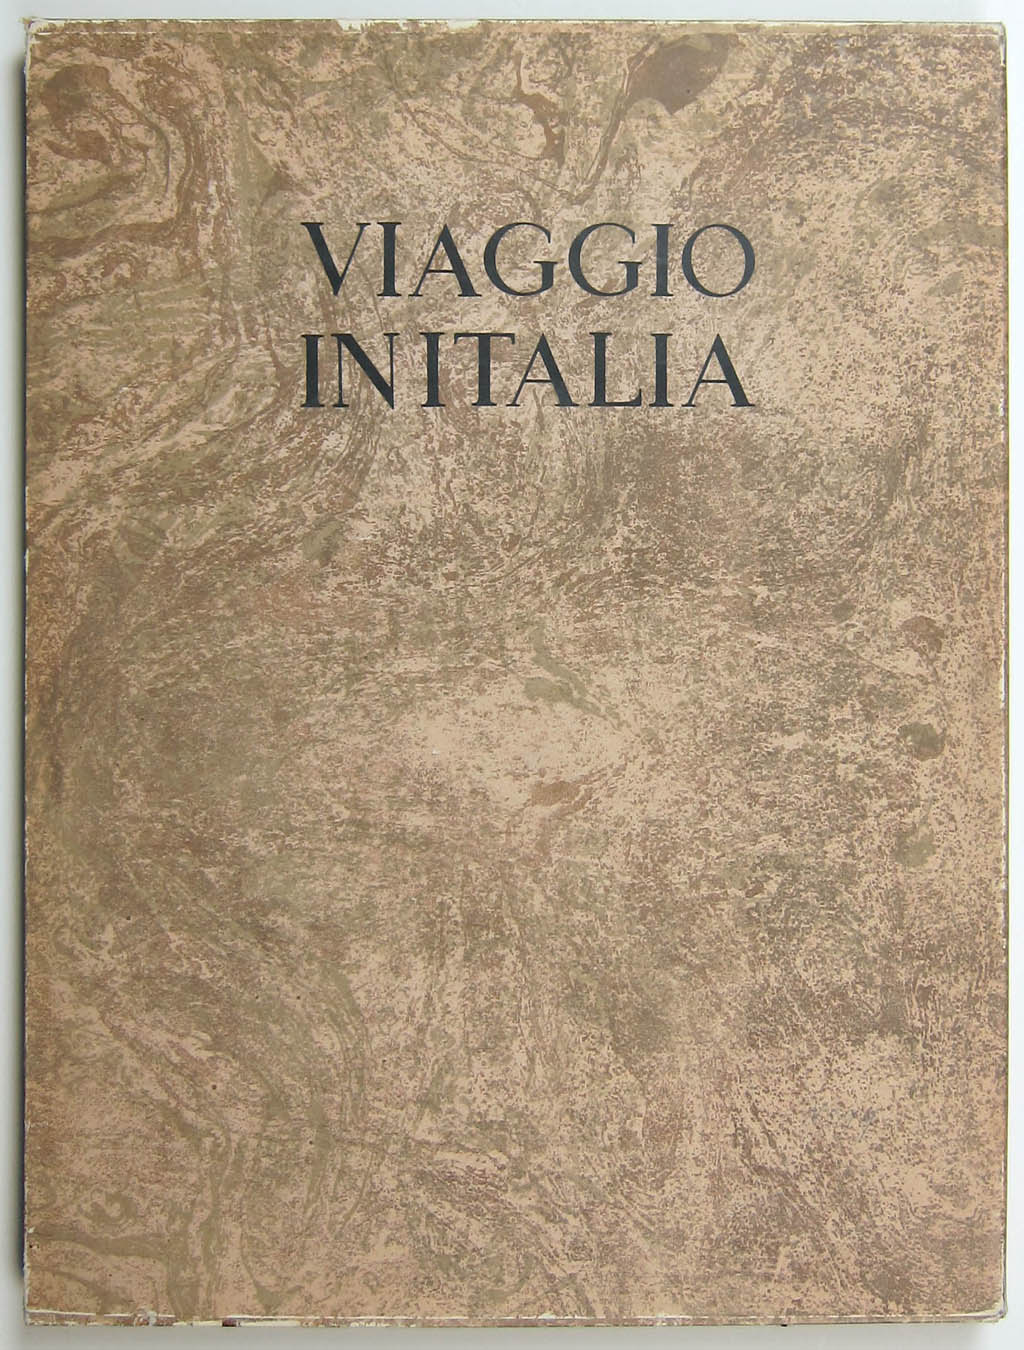 Eugene Berman - Viaggio in Italia - portfolio - 1951 portfolio of lithographs and text